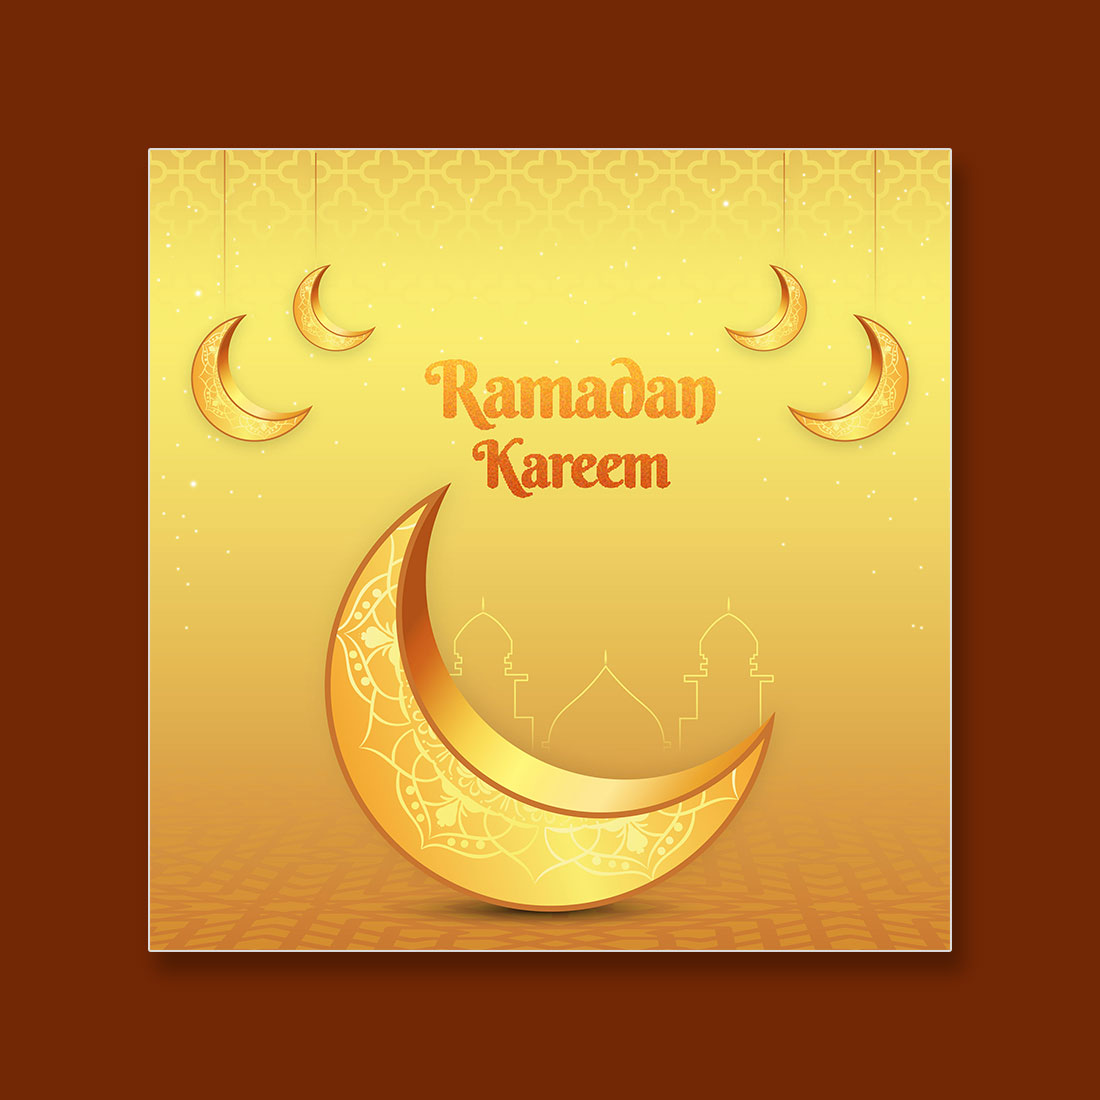 Ramadan Kareem greeting card design with Islamic background preview image.